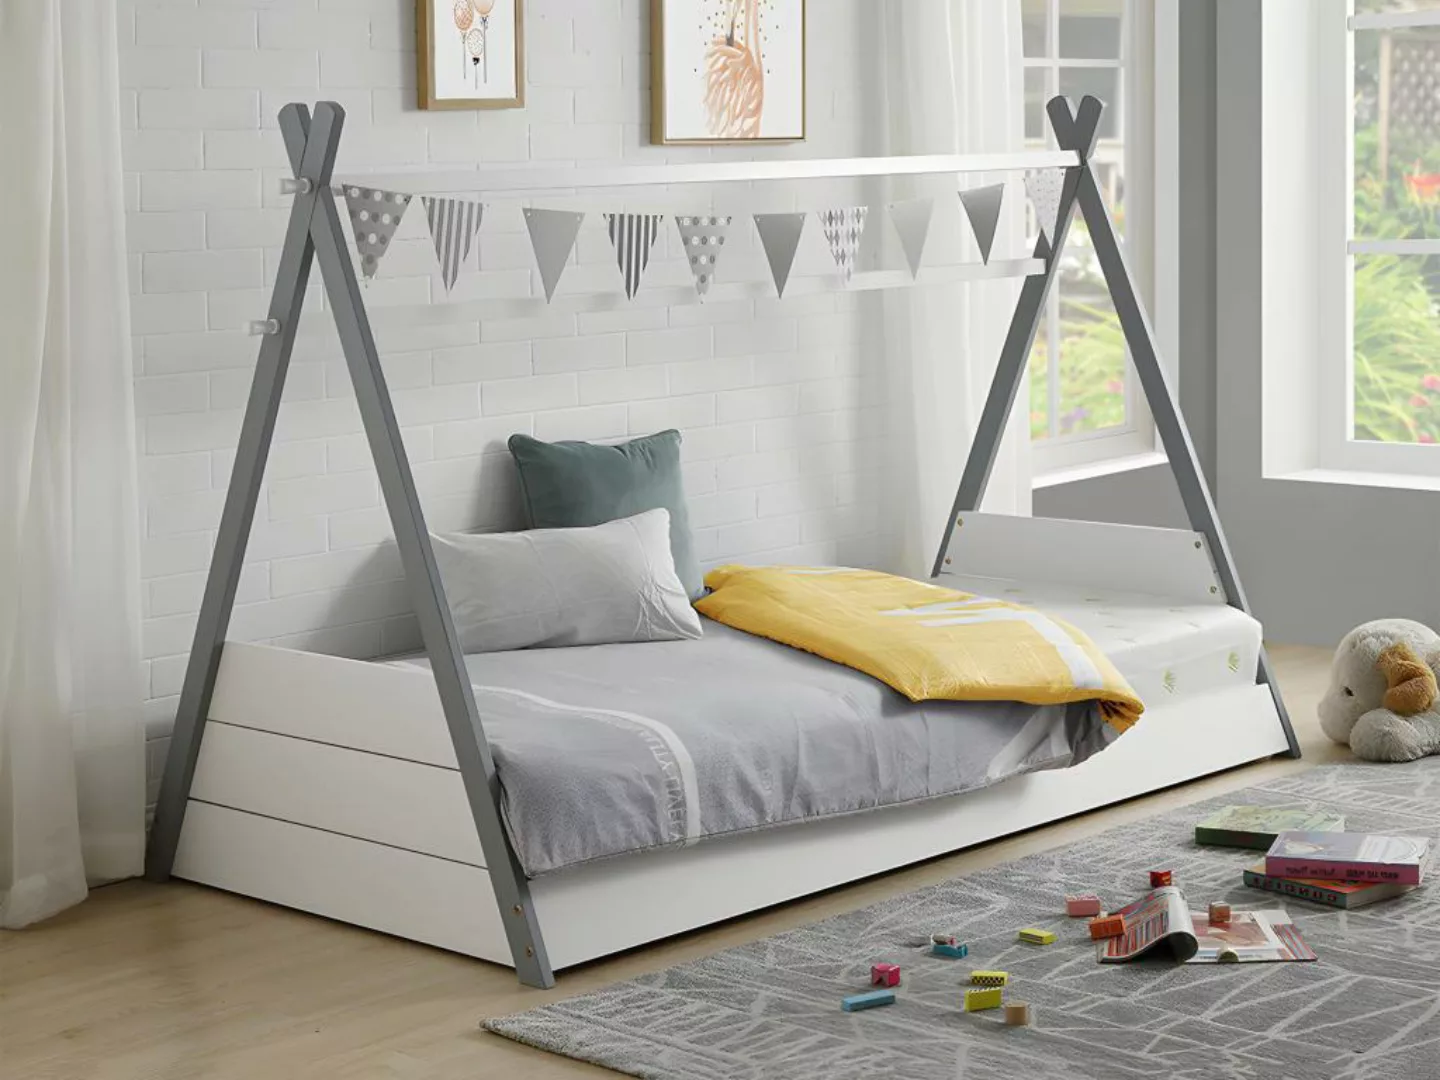 Kinderbett Tipibett - 90 x 190 cm - Kiefernholz - Weiß & Grau - SIOUX günstig online kaufen